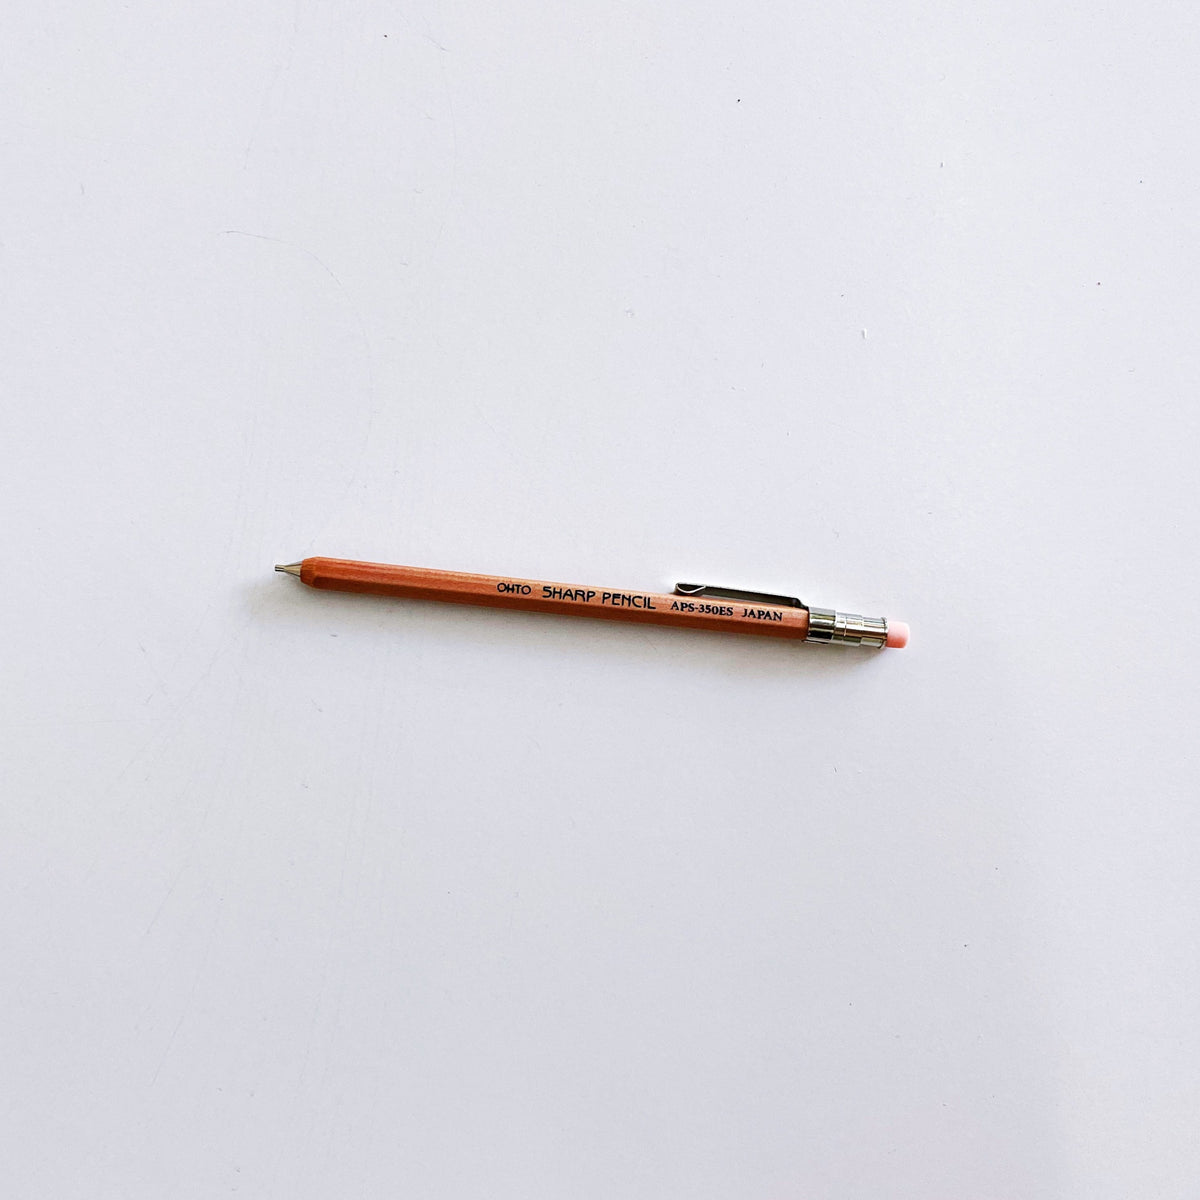 Emott 10 Pen Set - 3